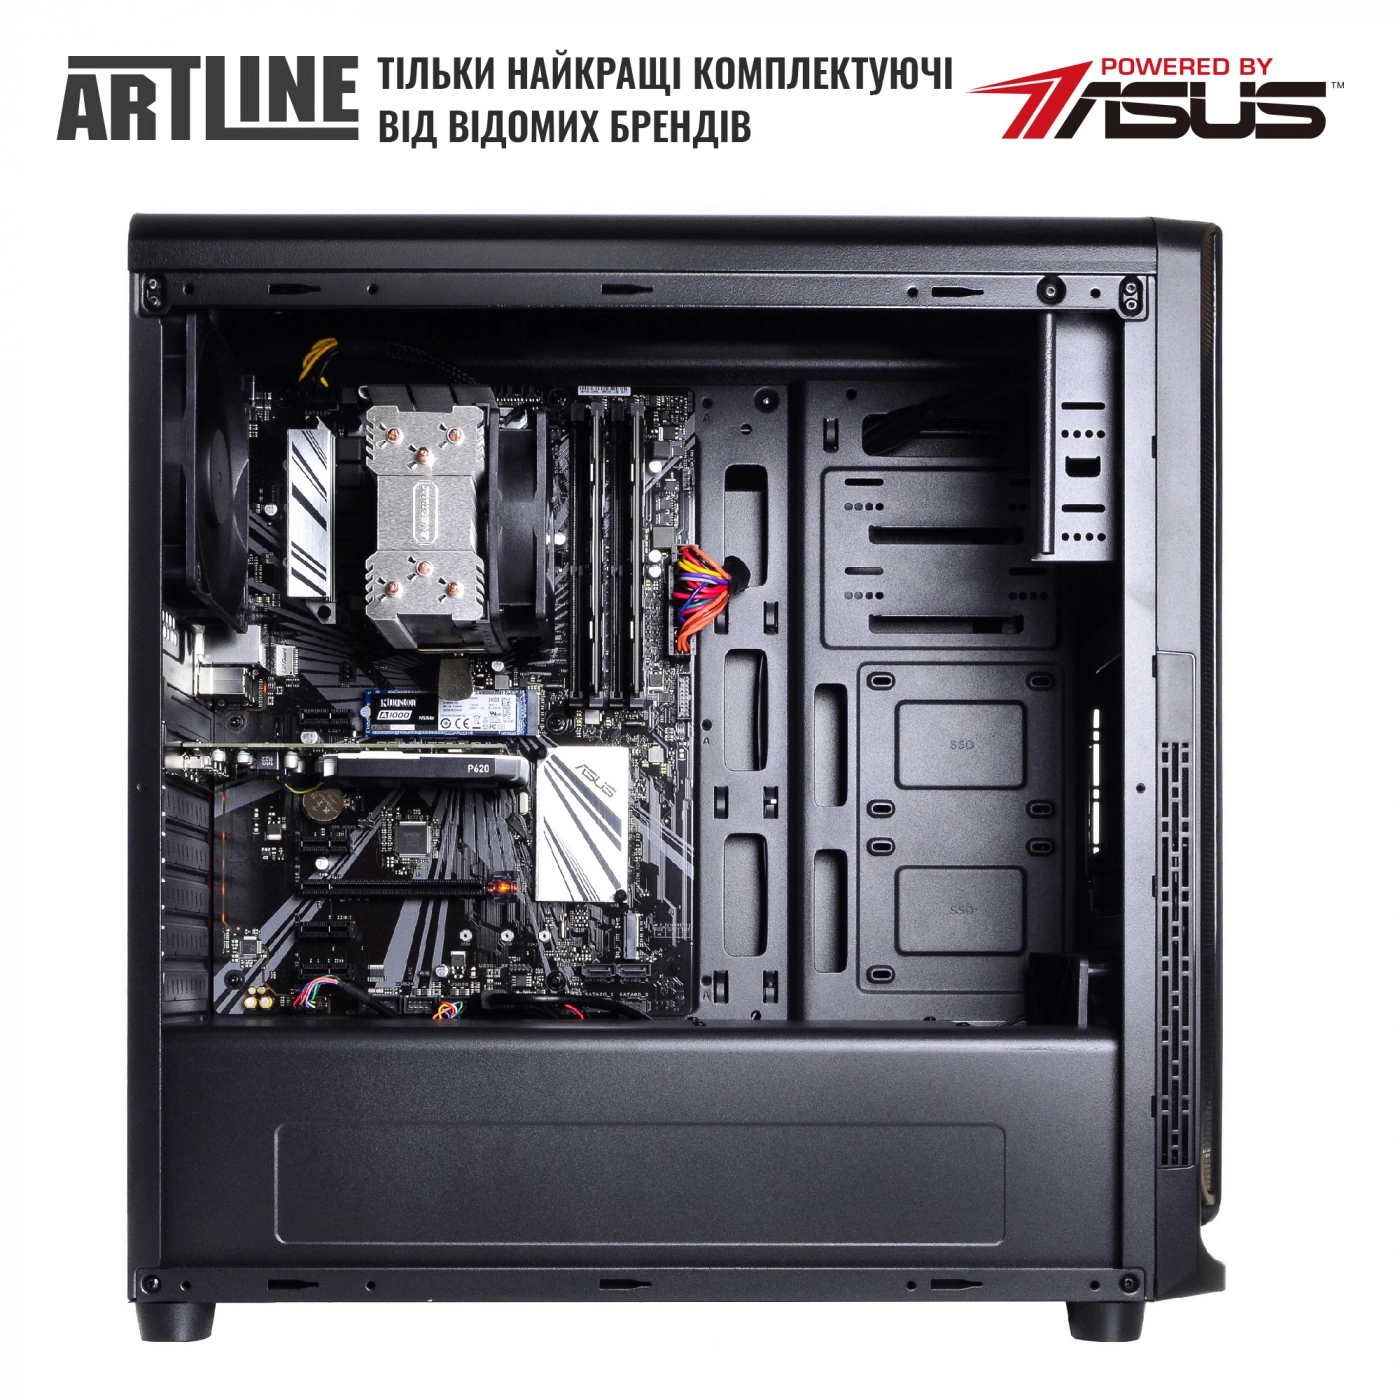 Купити Сервер ARTLINE Business T65v08 - фото 5